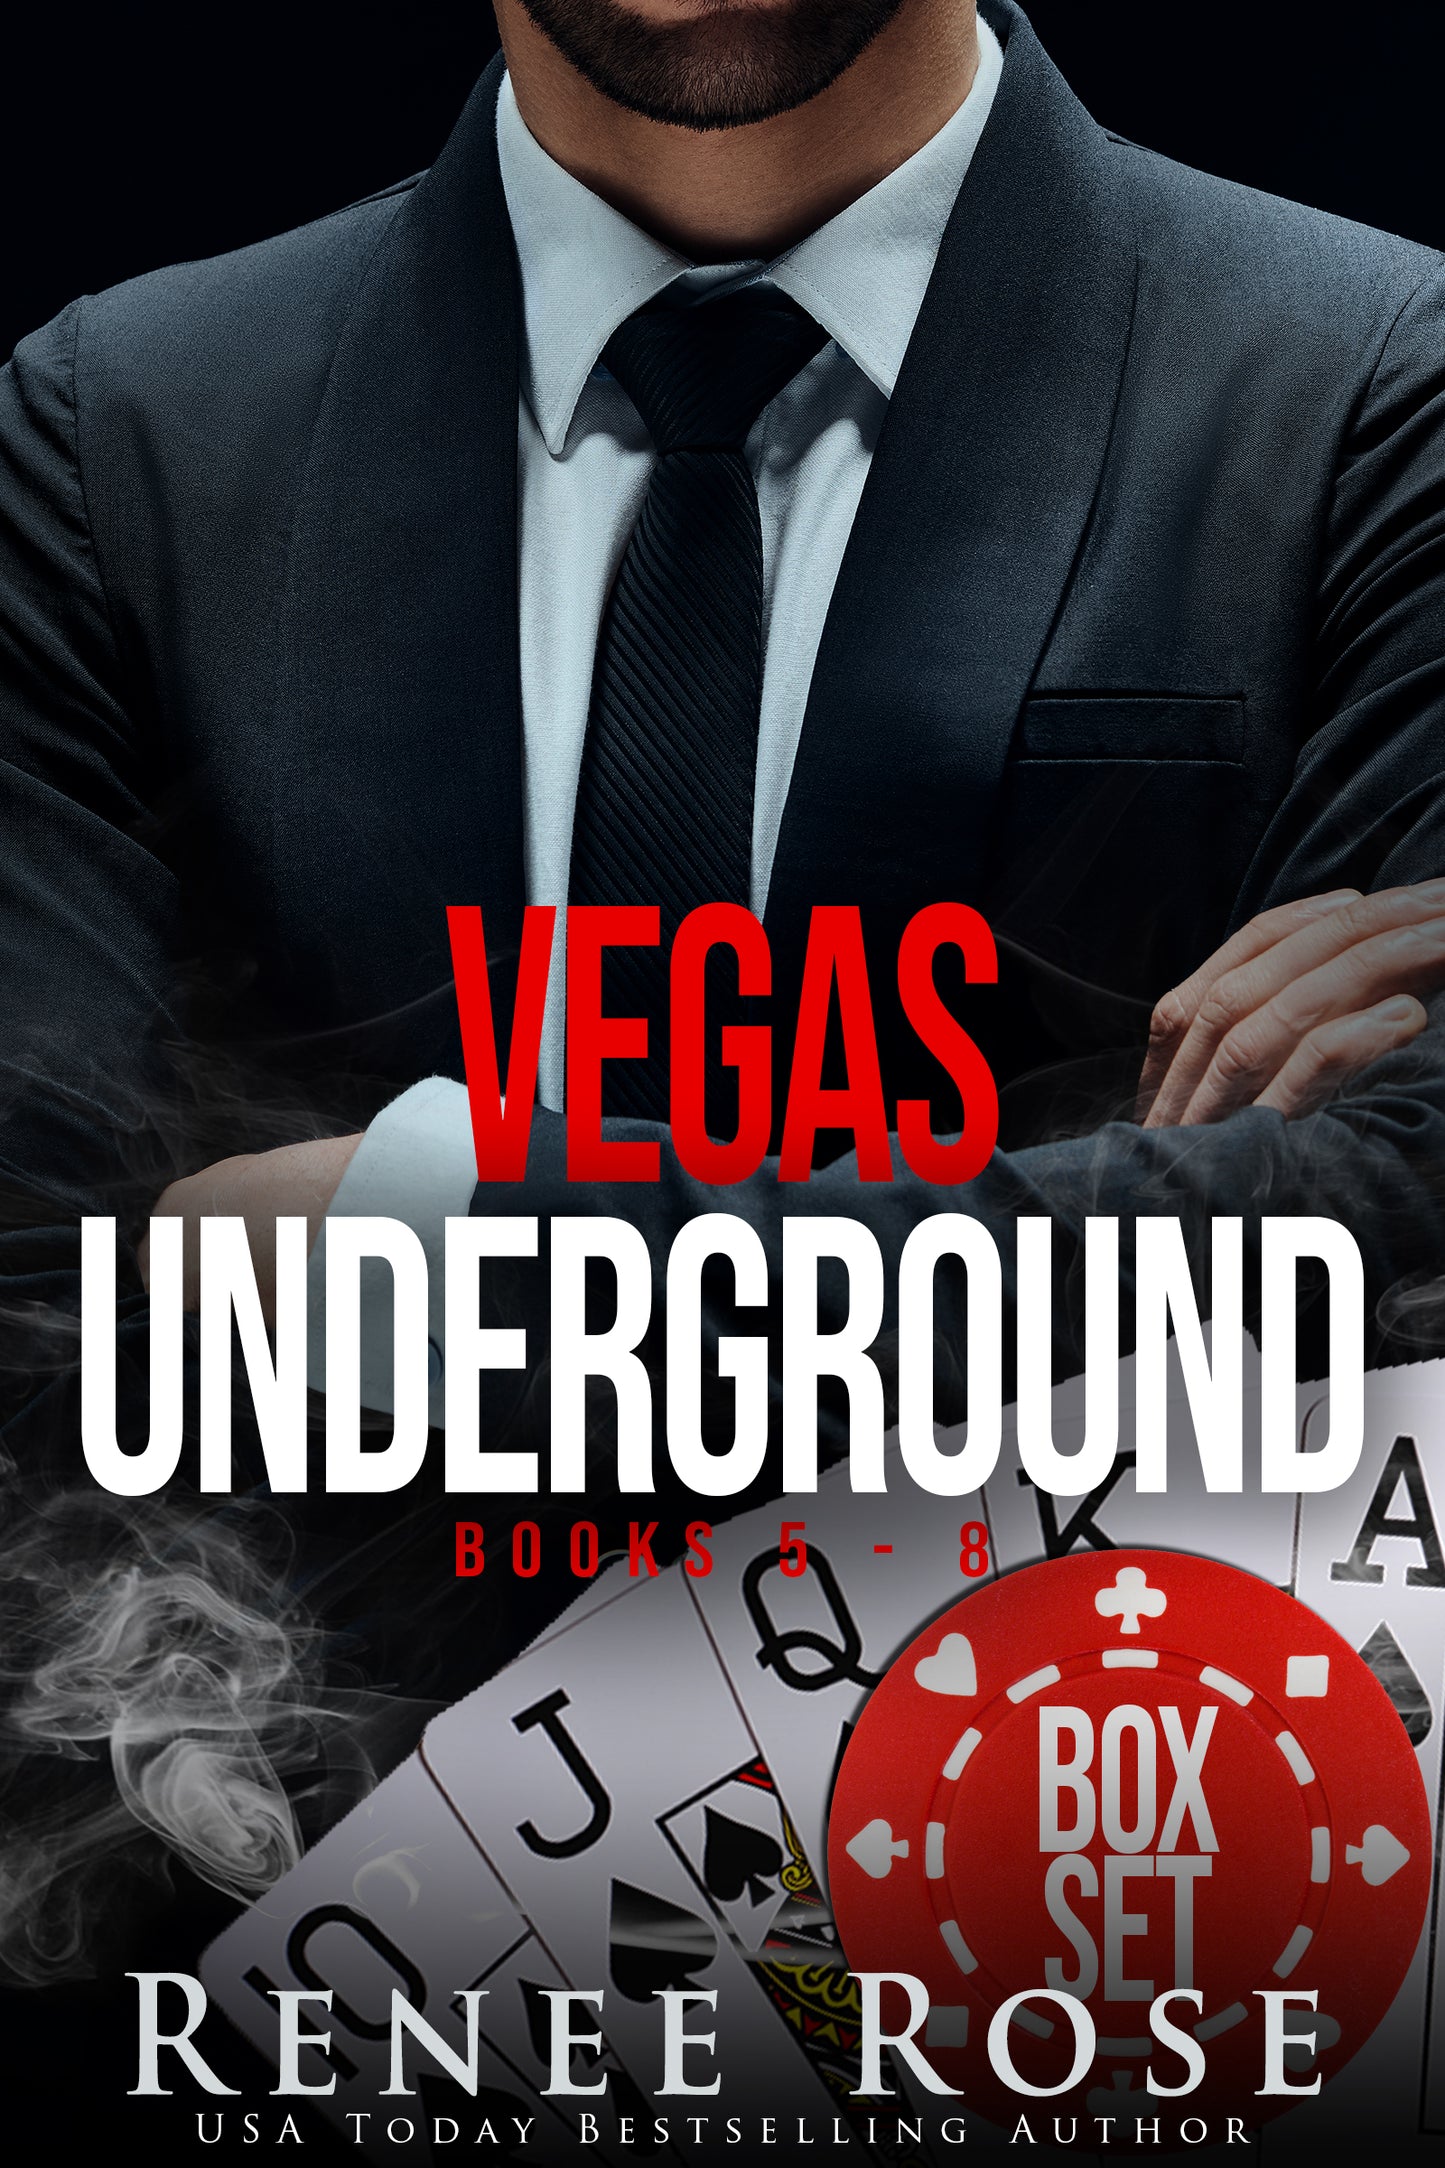 Vegas Underground Set: E-Books 5-8